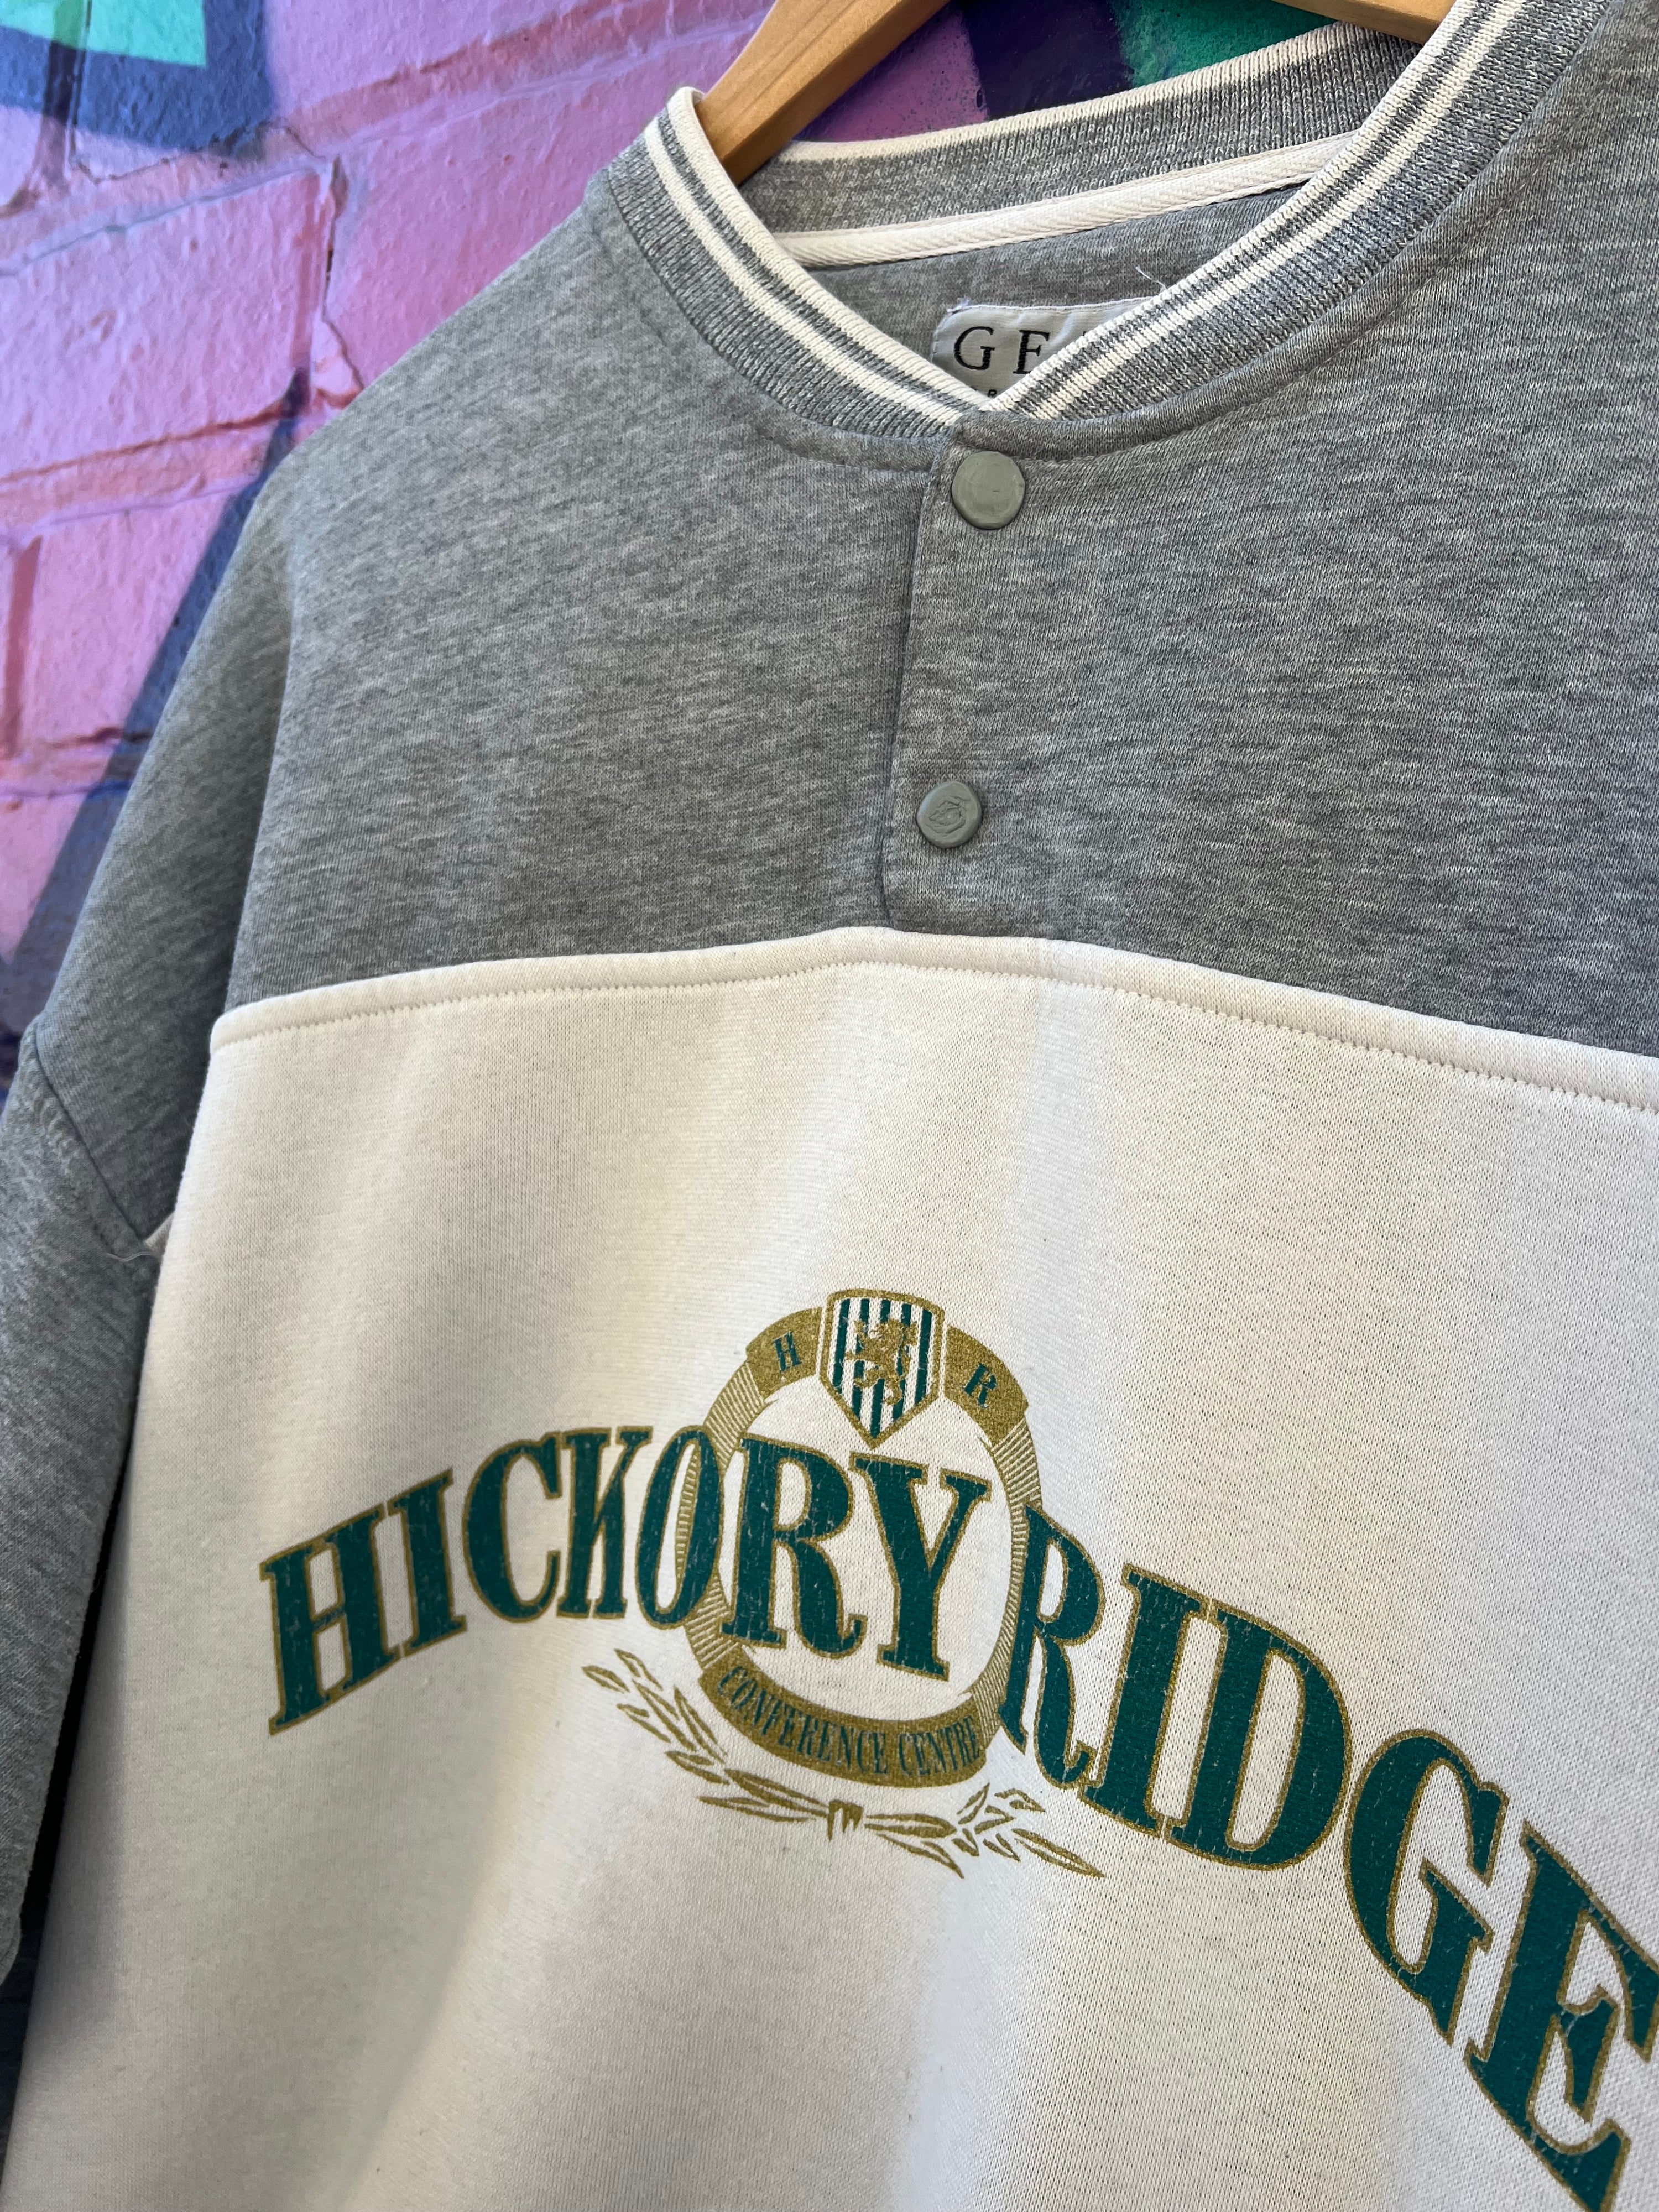 XL - Vintage Hickory Ridge Conference Centre